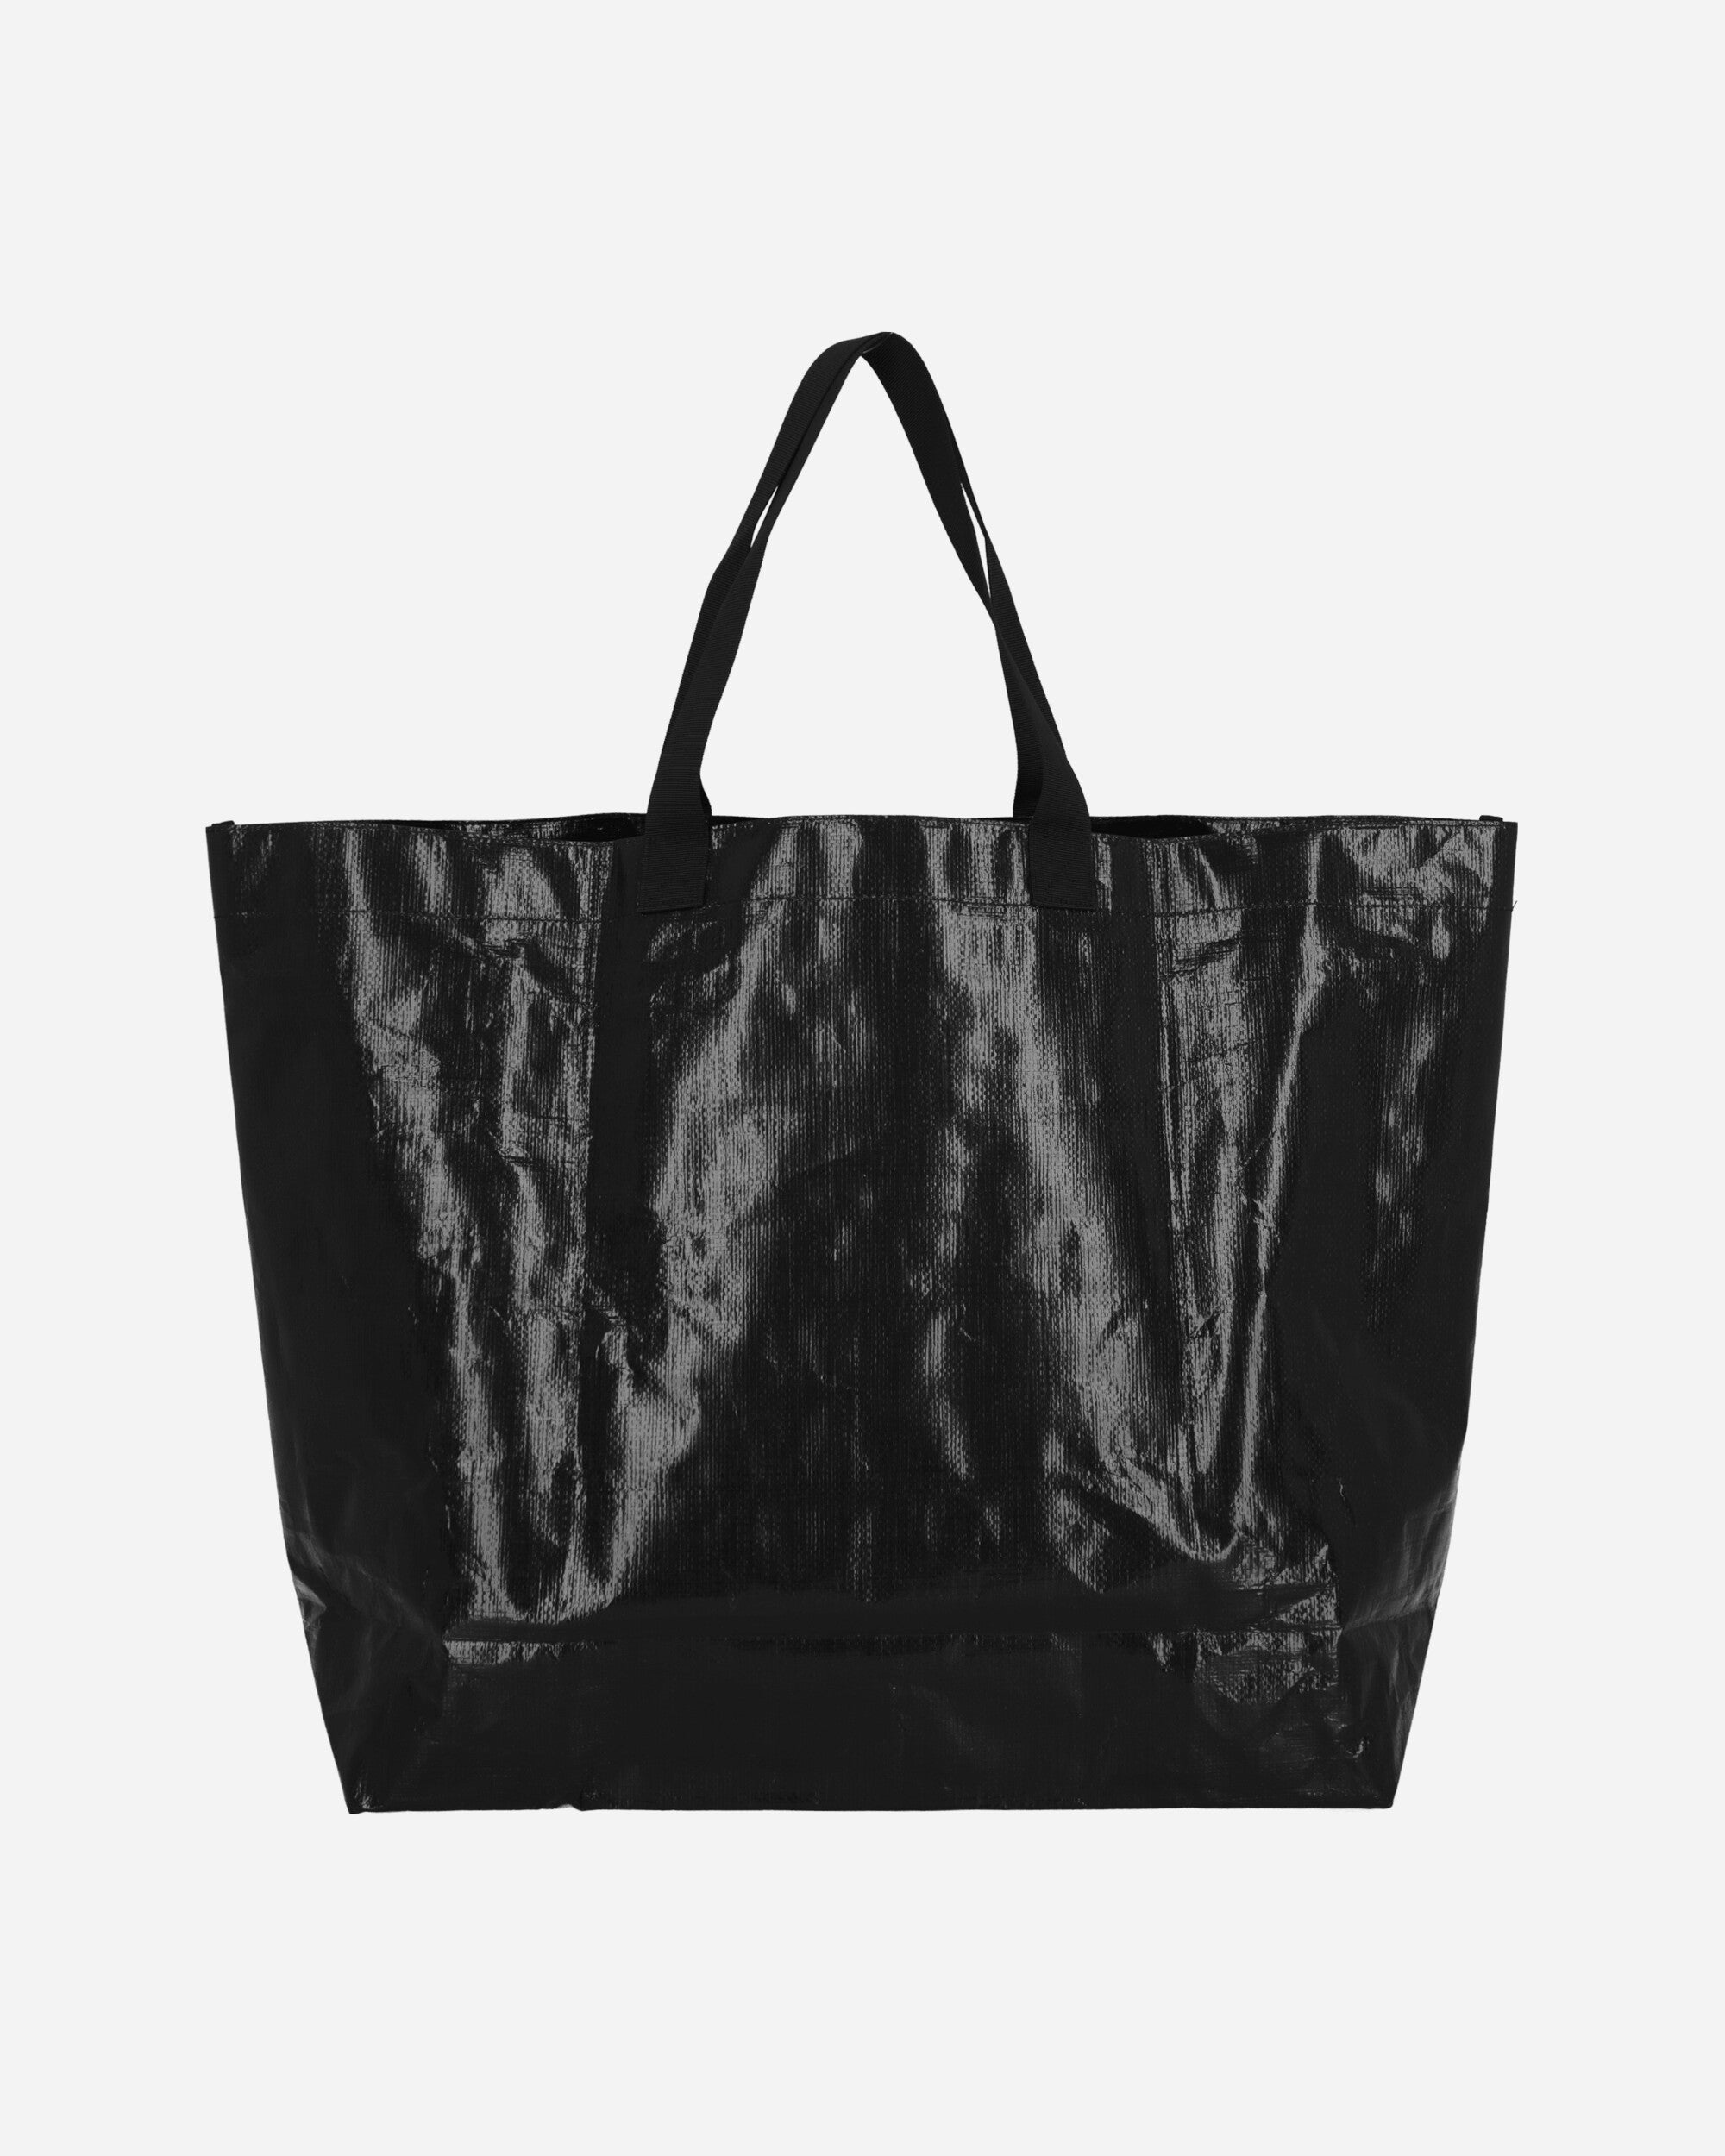 Neighborhood Logo Flexible Bag-L Black Bags and Backpacks Tote Bags 241MYNH-CG05 BK